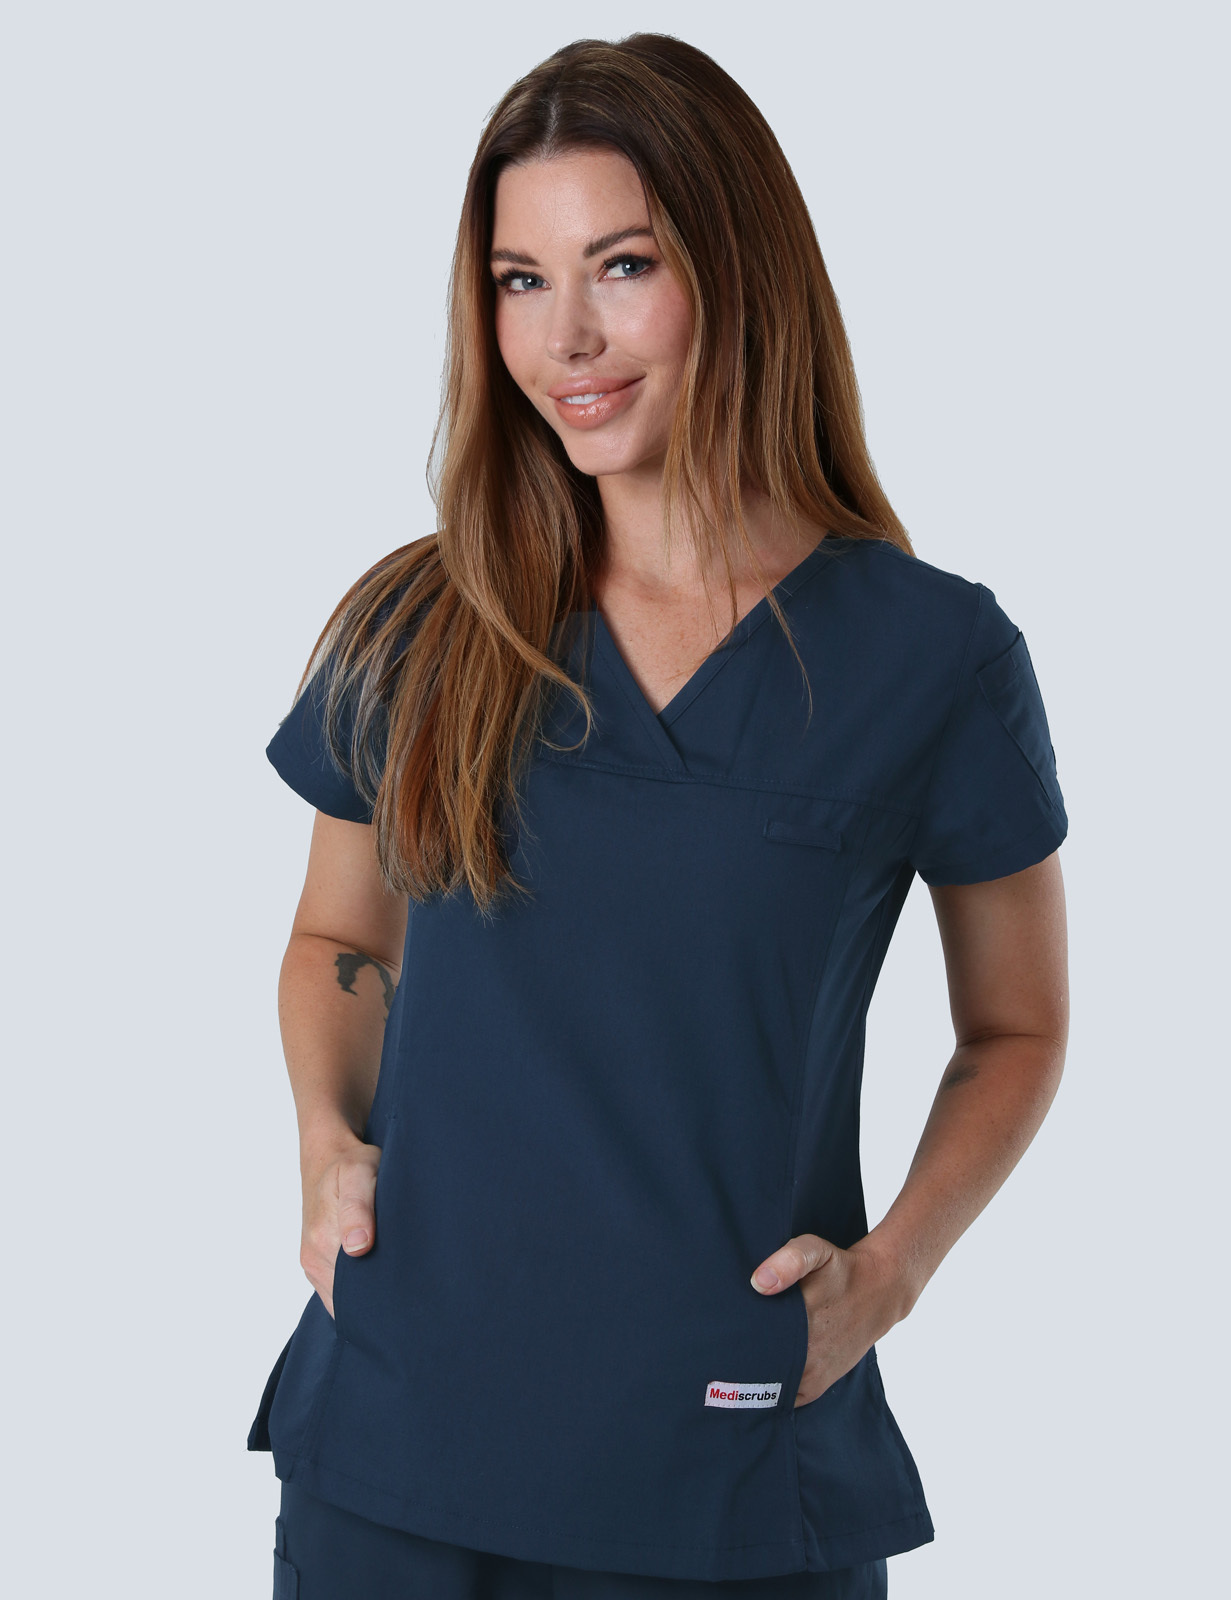 Frankston - AAAU Nurse (Women's Fit Solid Scrub Top in Navy incl Logos)